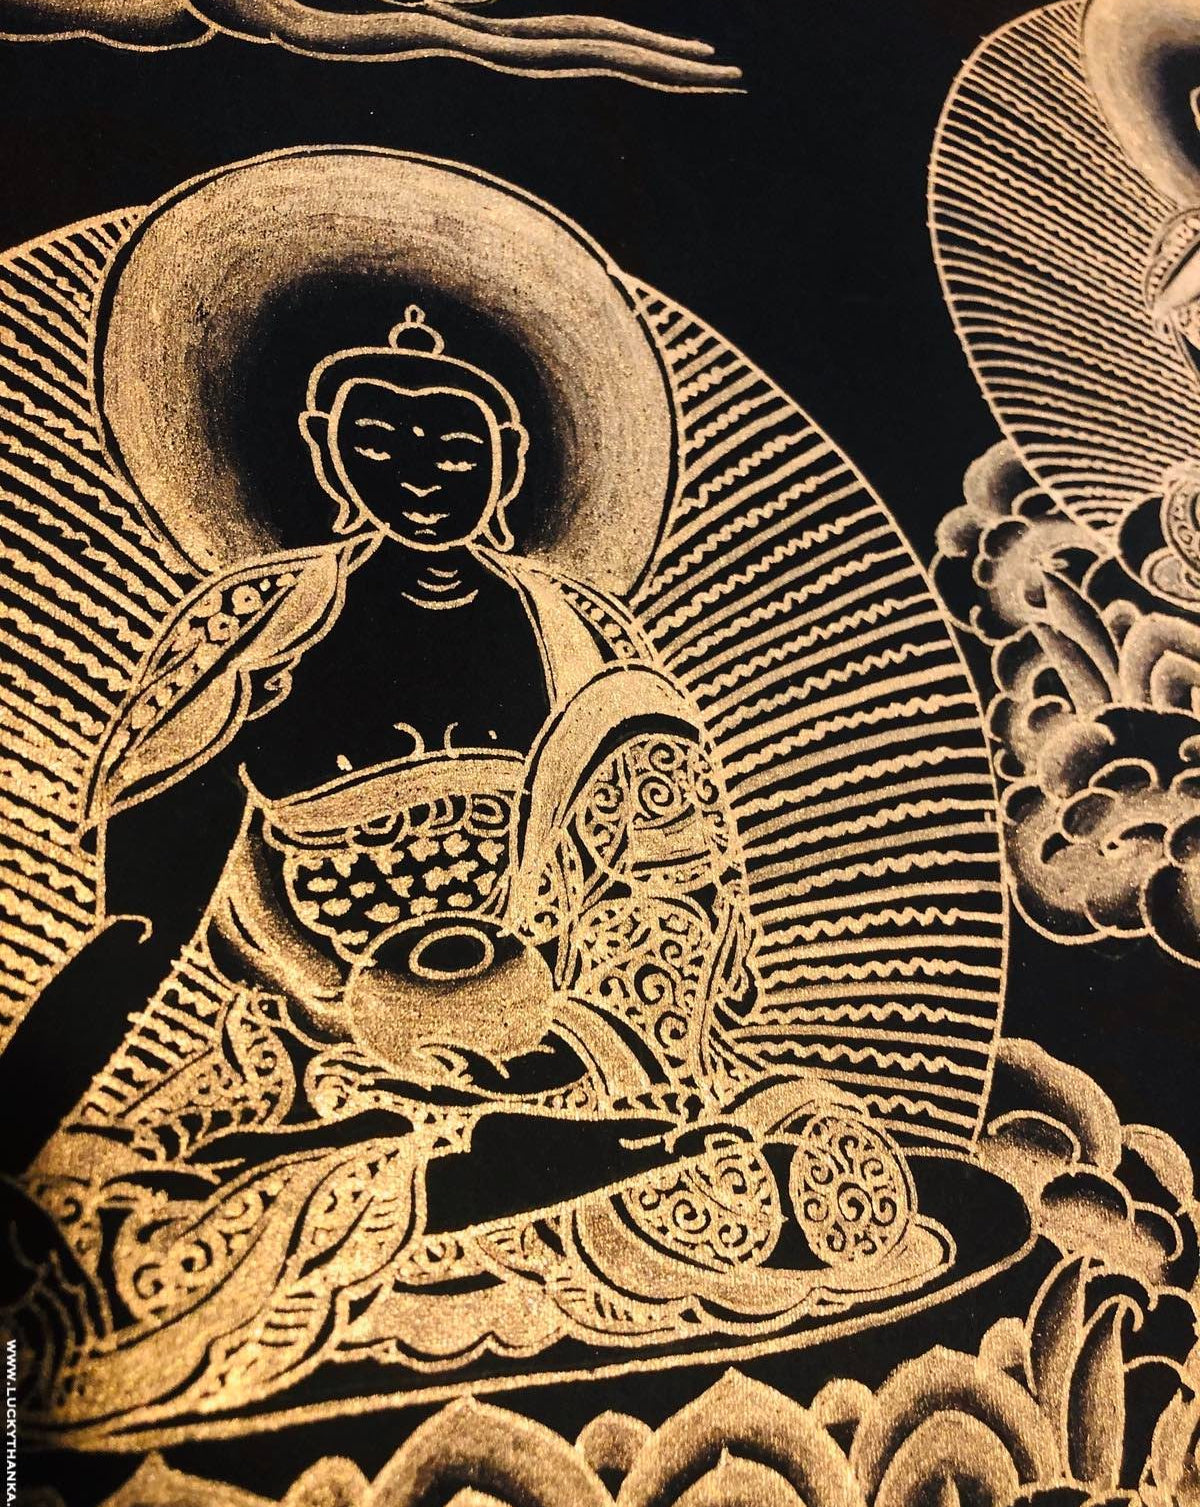 Black and Gold Kalachakra Mandala Thangka Painting with 5 Buddha | Large Size - Lucky Thanka